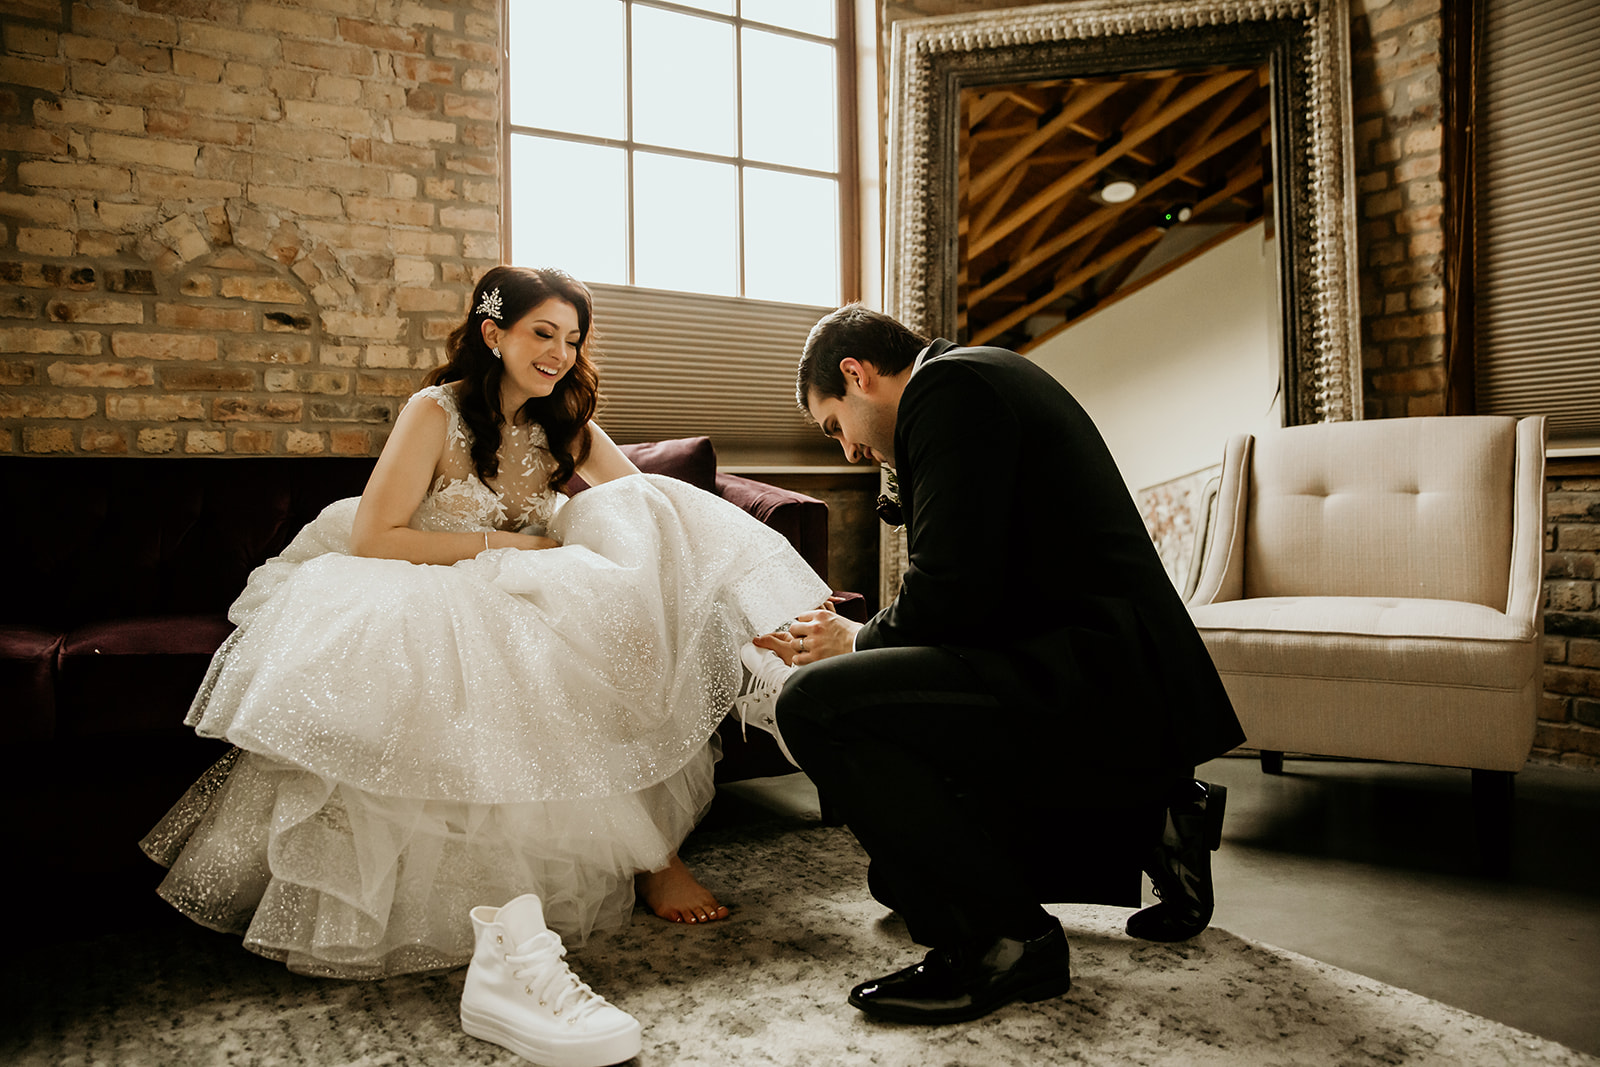 Groom helping his bride switch from heels to sneakers in an elegant bridal room.